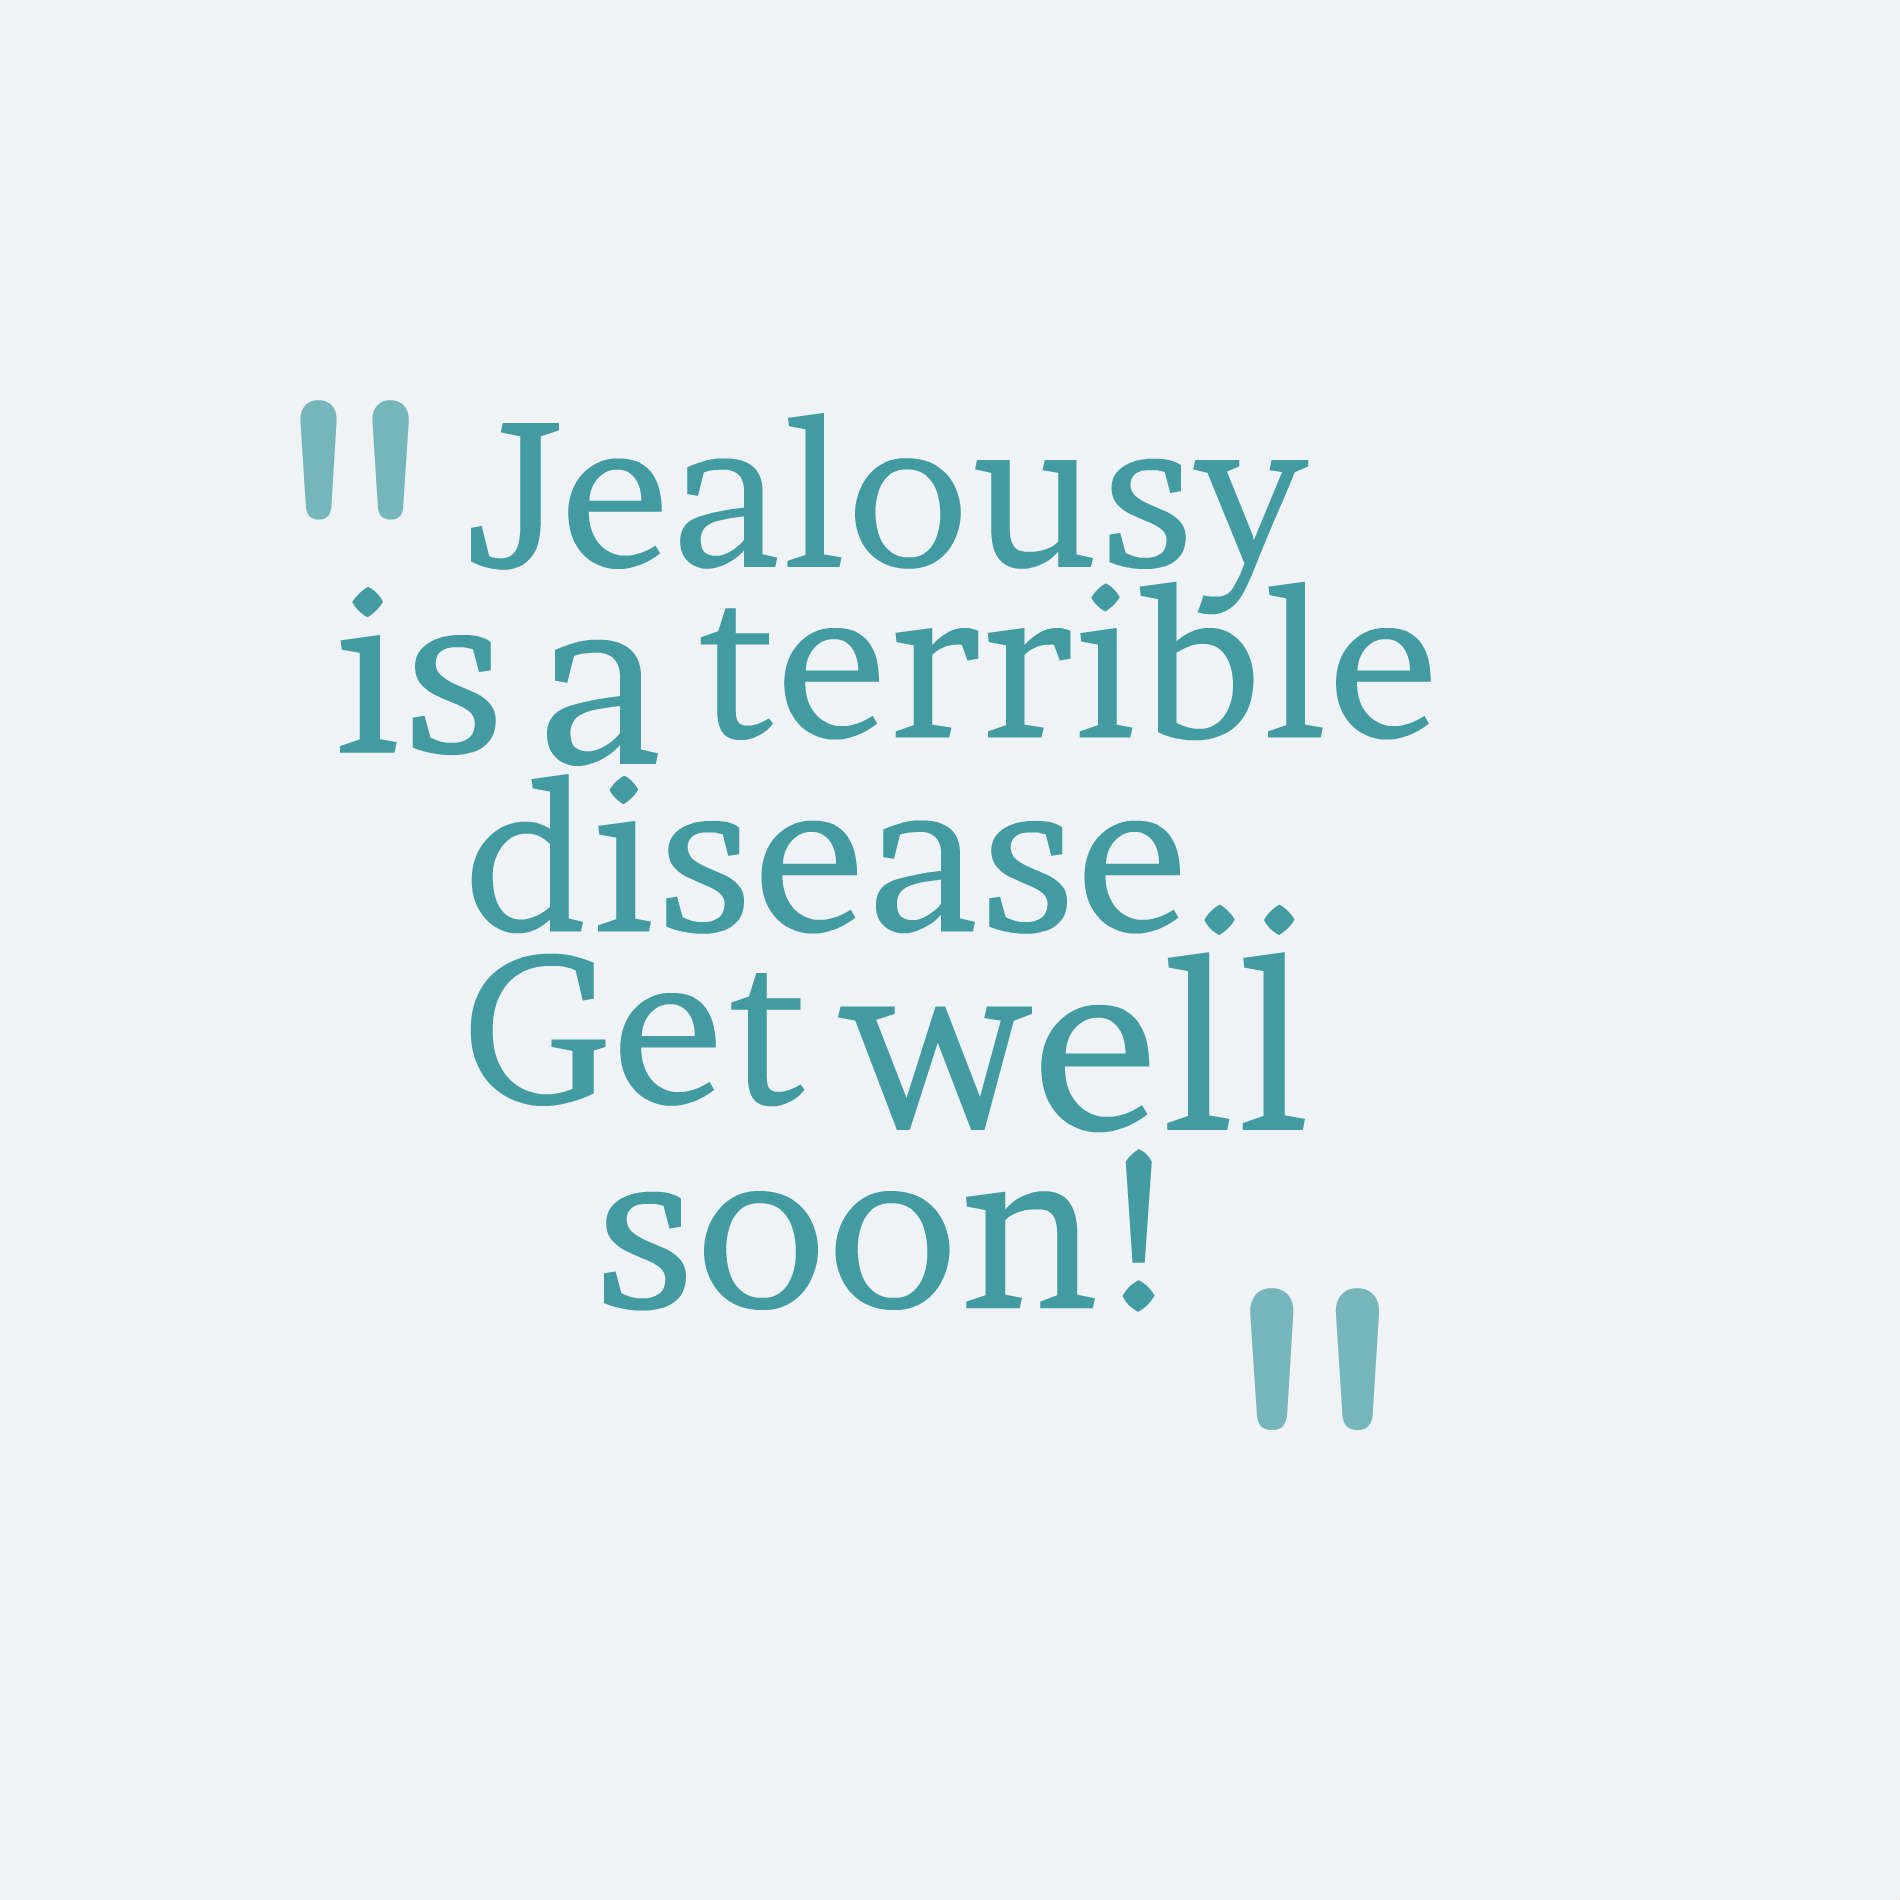 Jealousy is a terrible disease.. Get well soon!